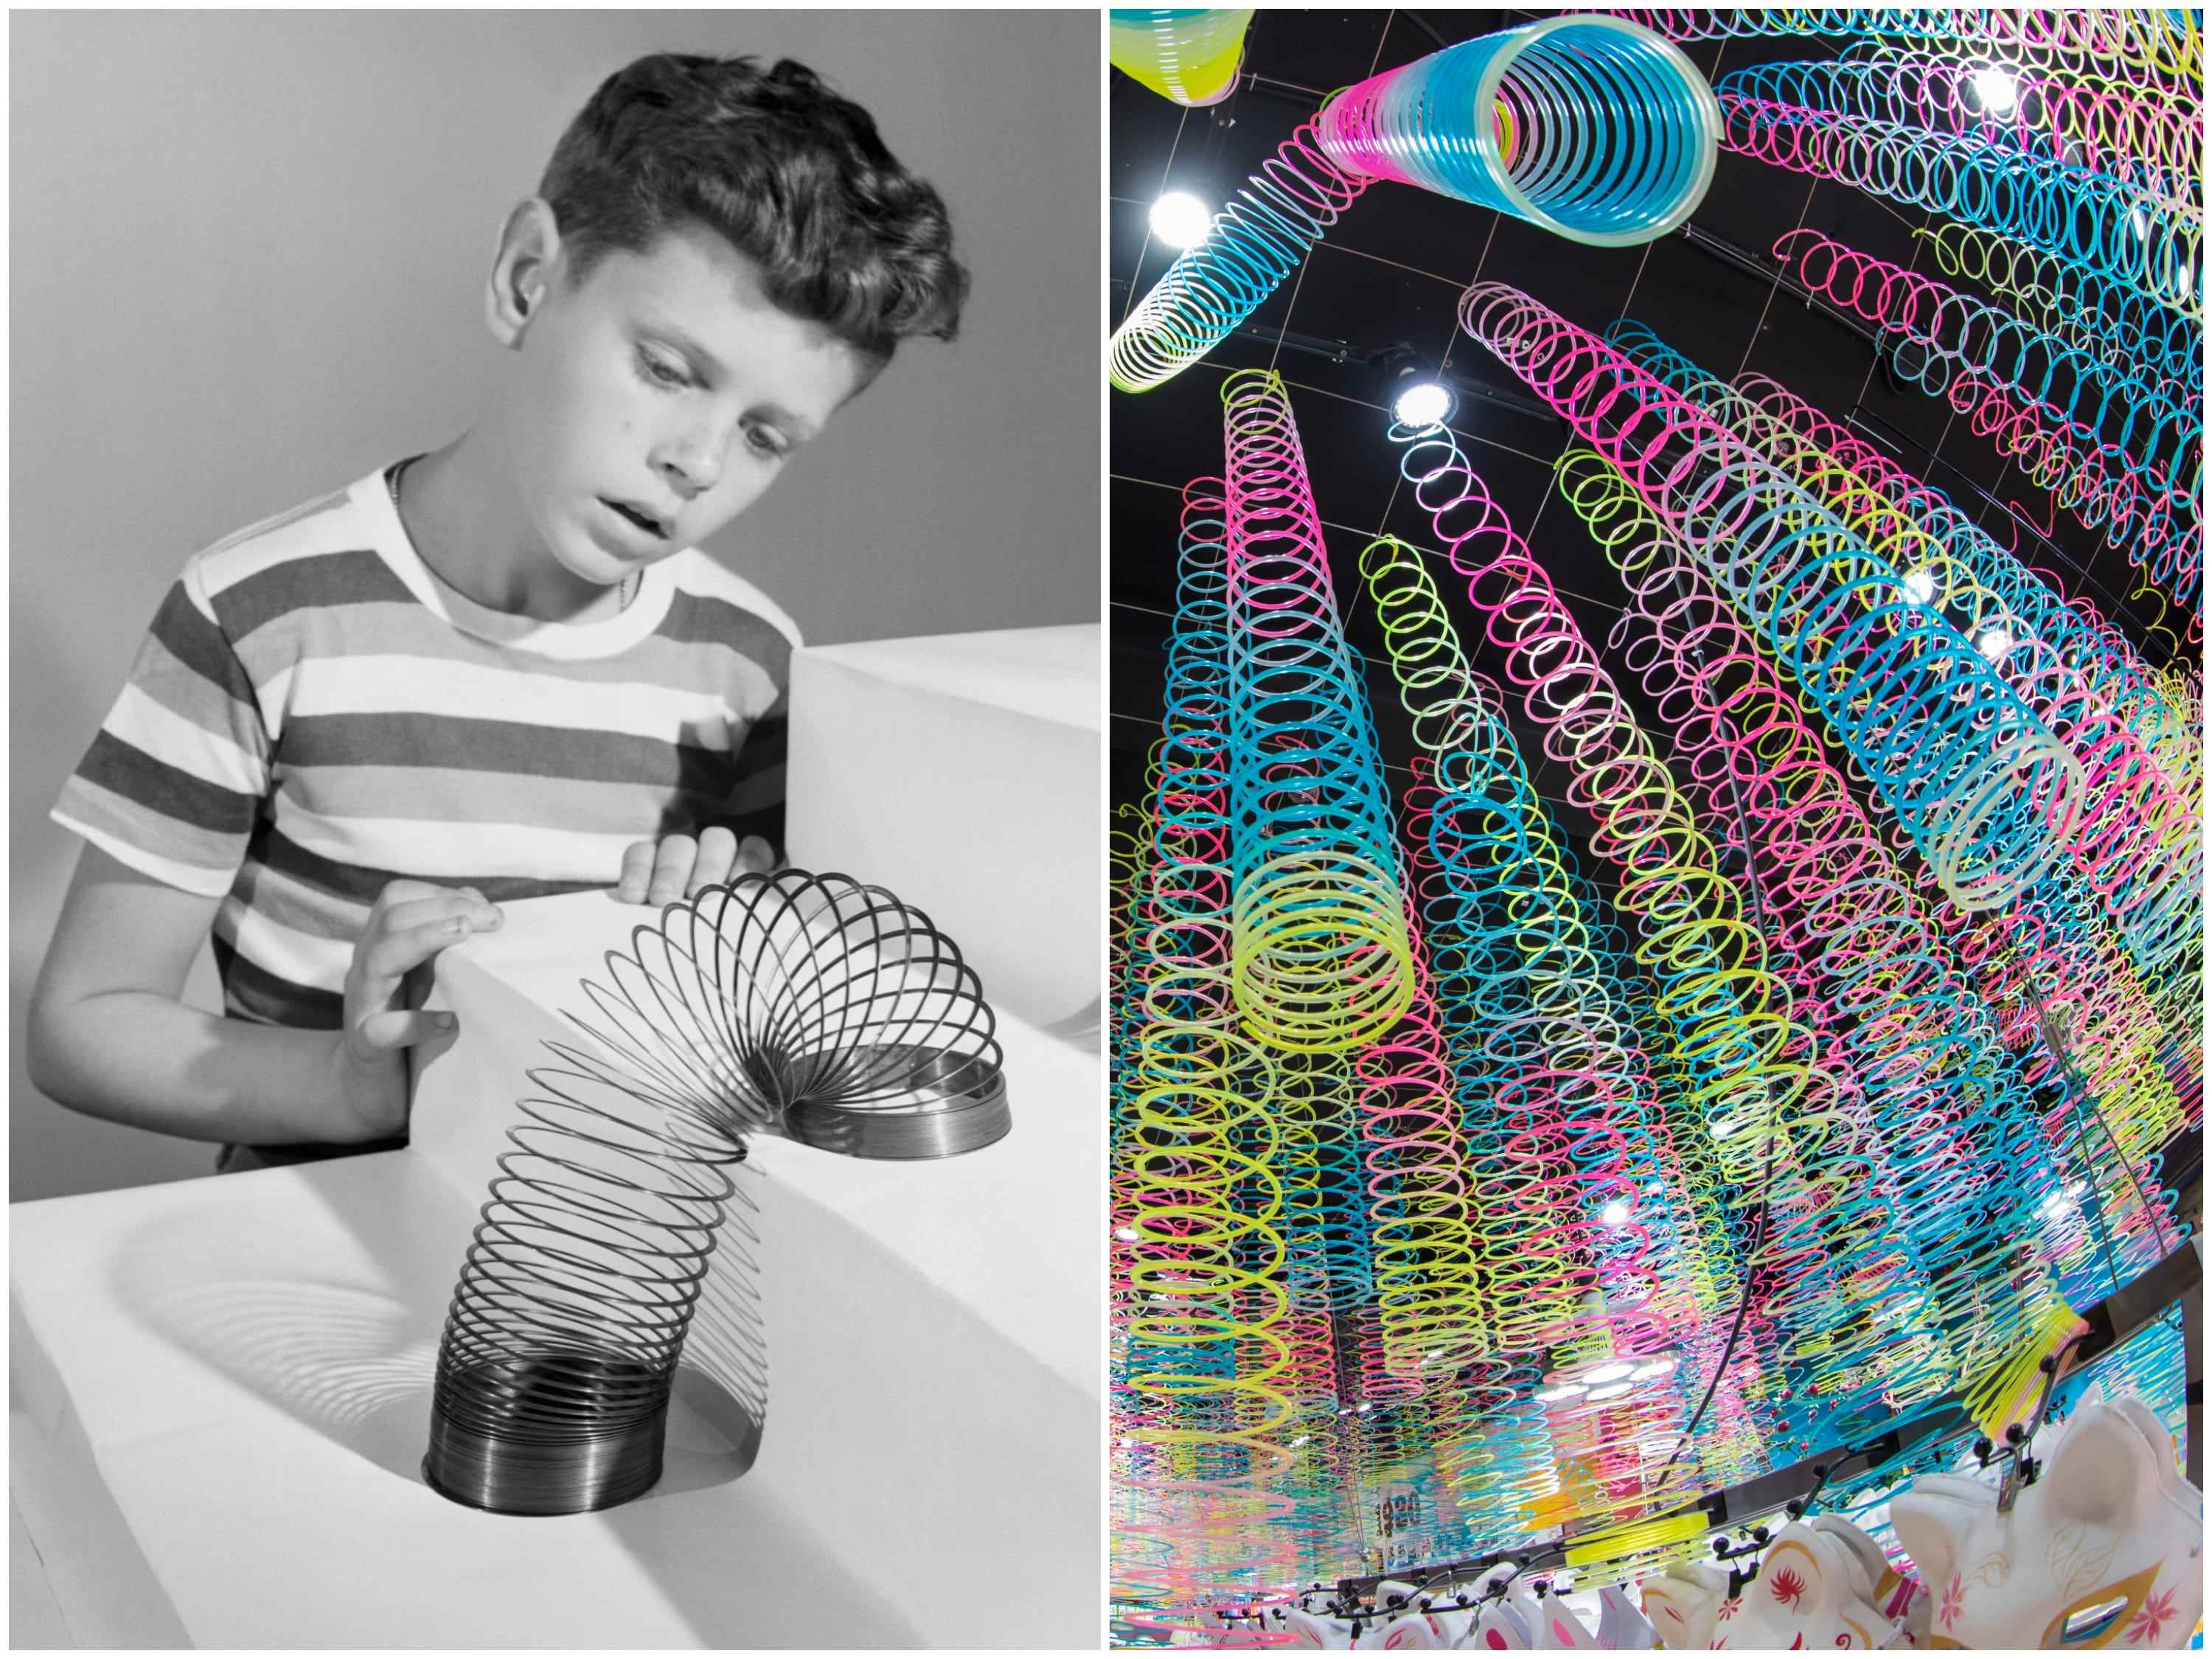 Slinky in den 1940ern vs. Slinky heute